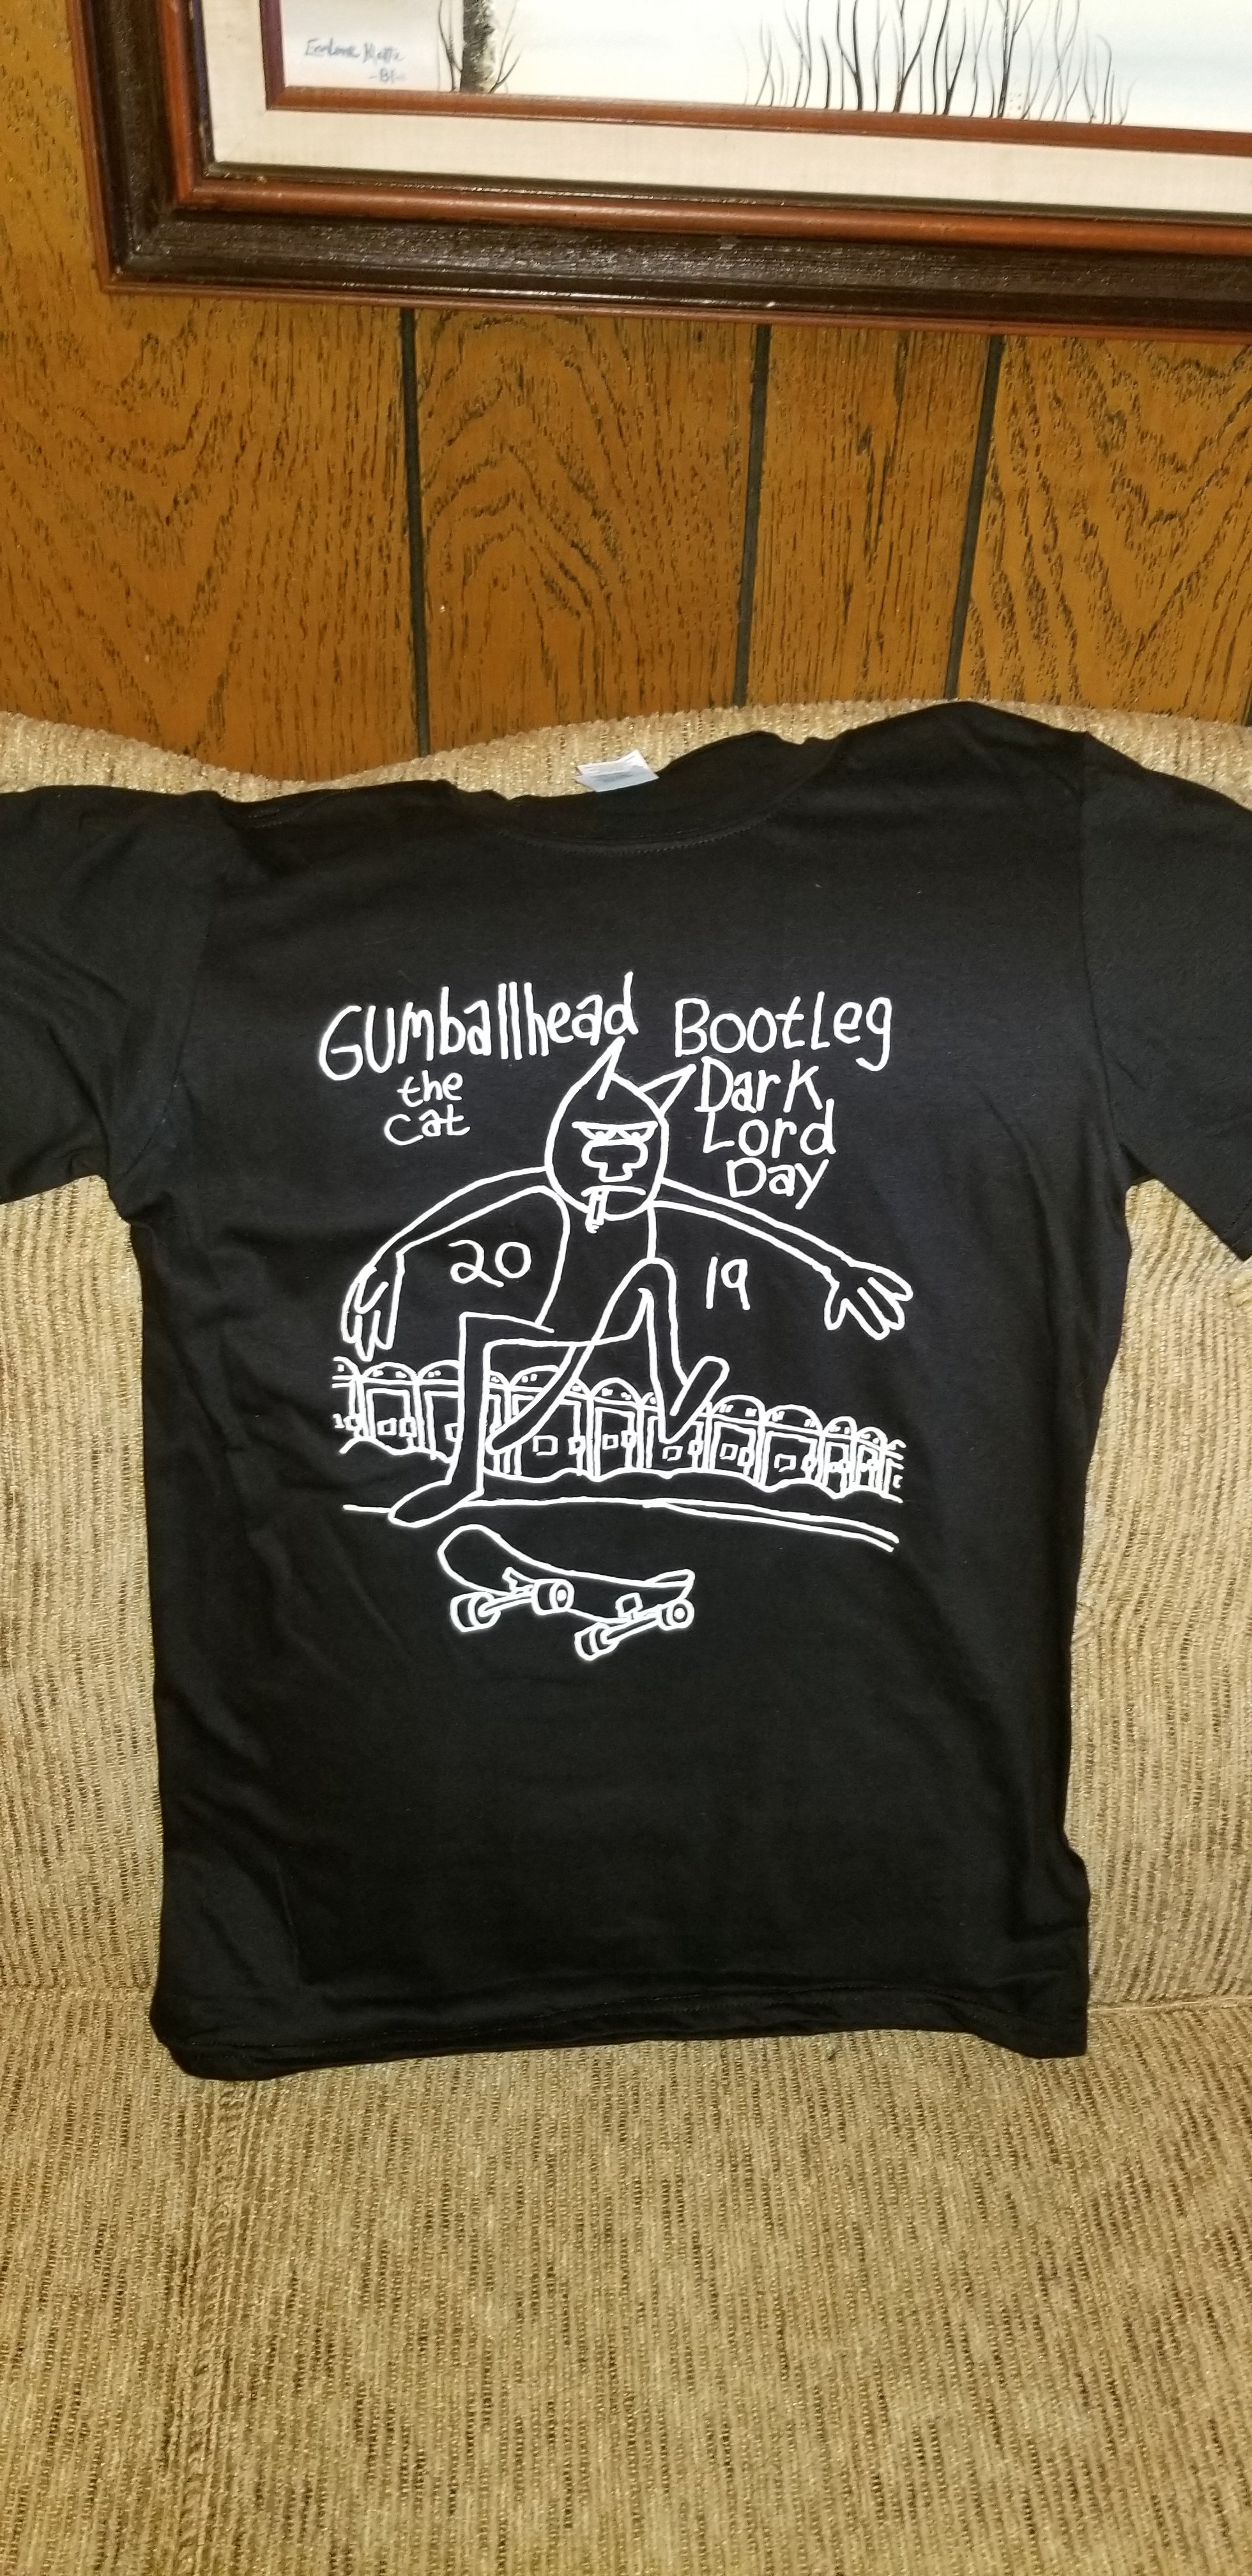 2019 gumballhead shirt.jpg